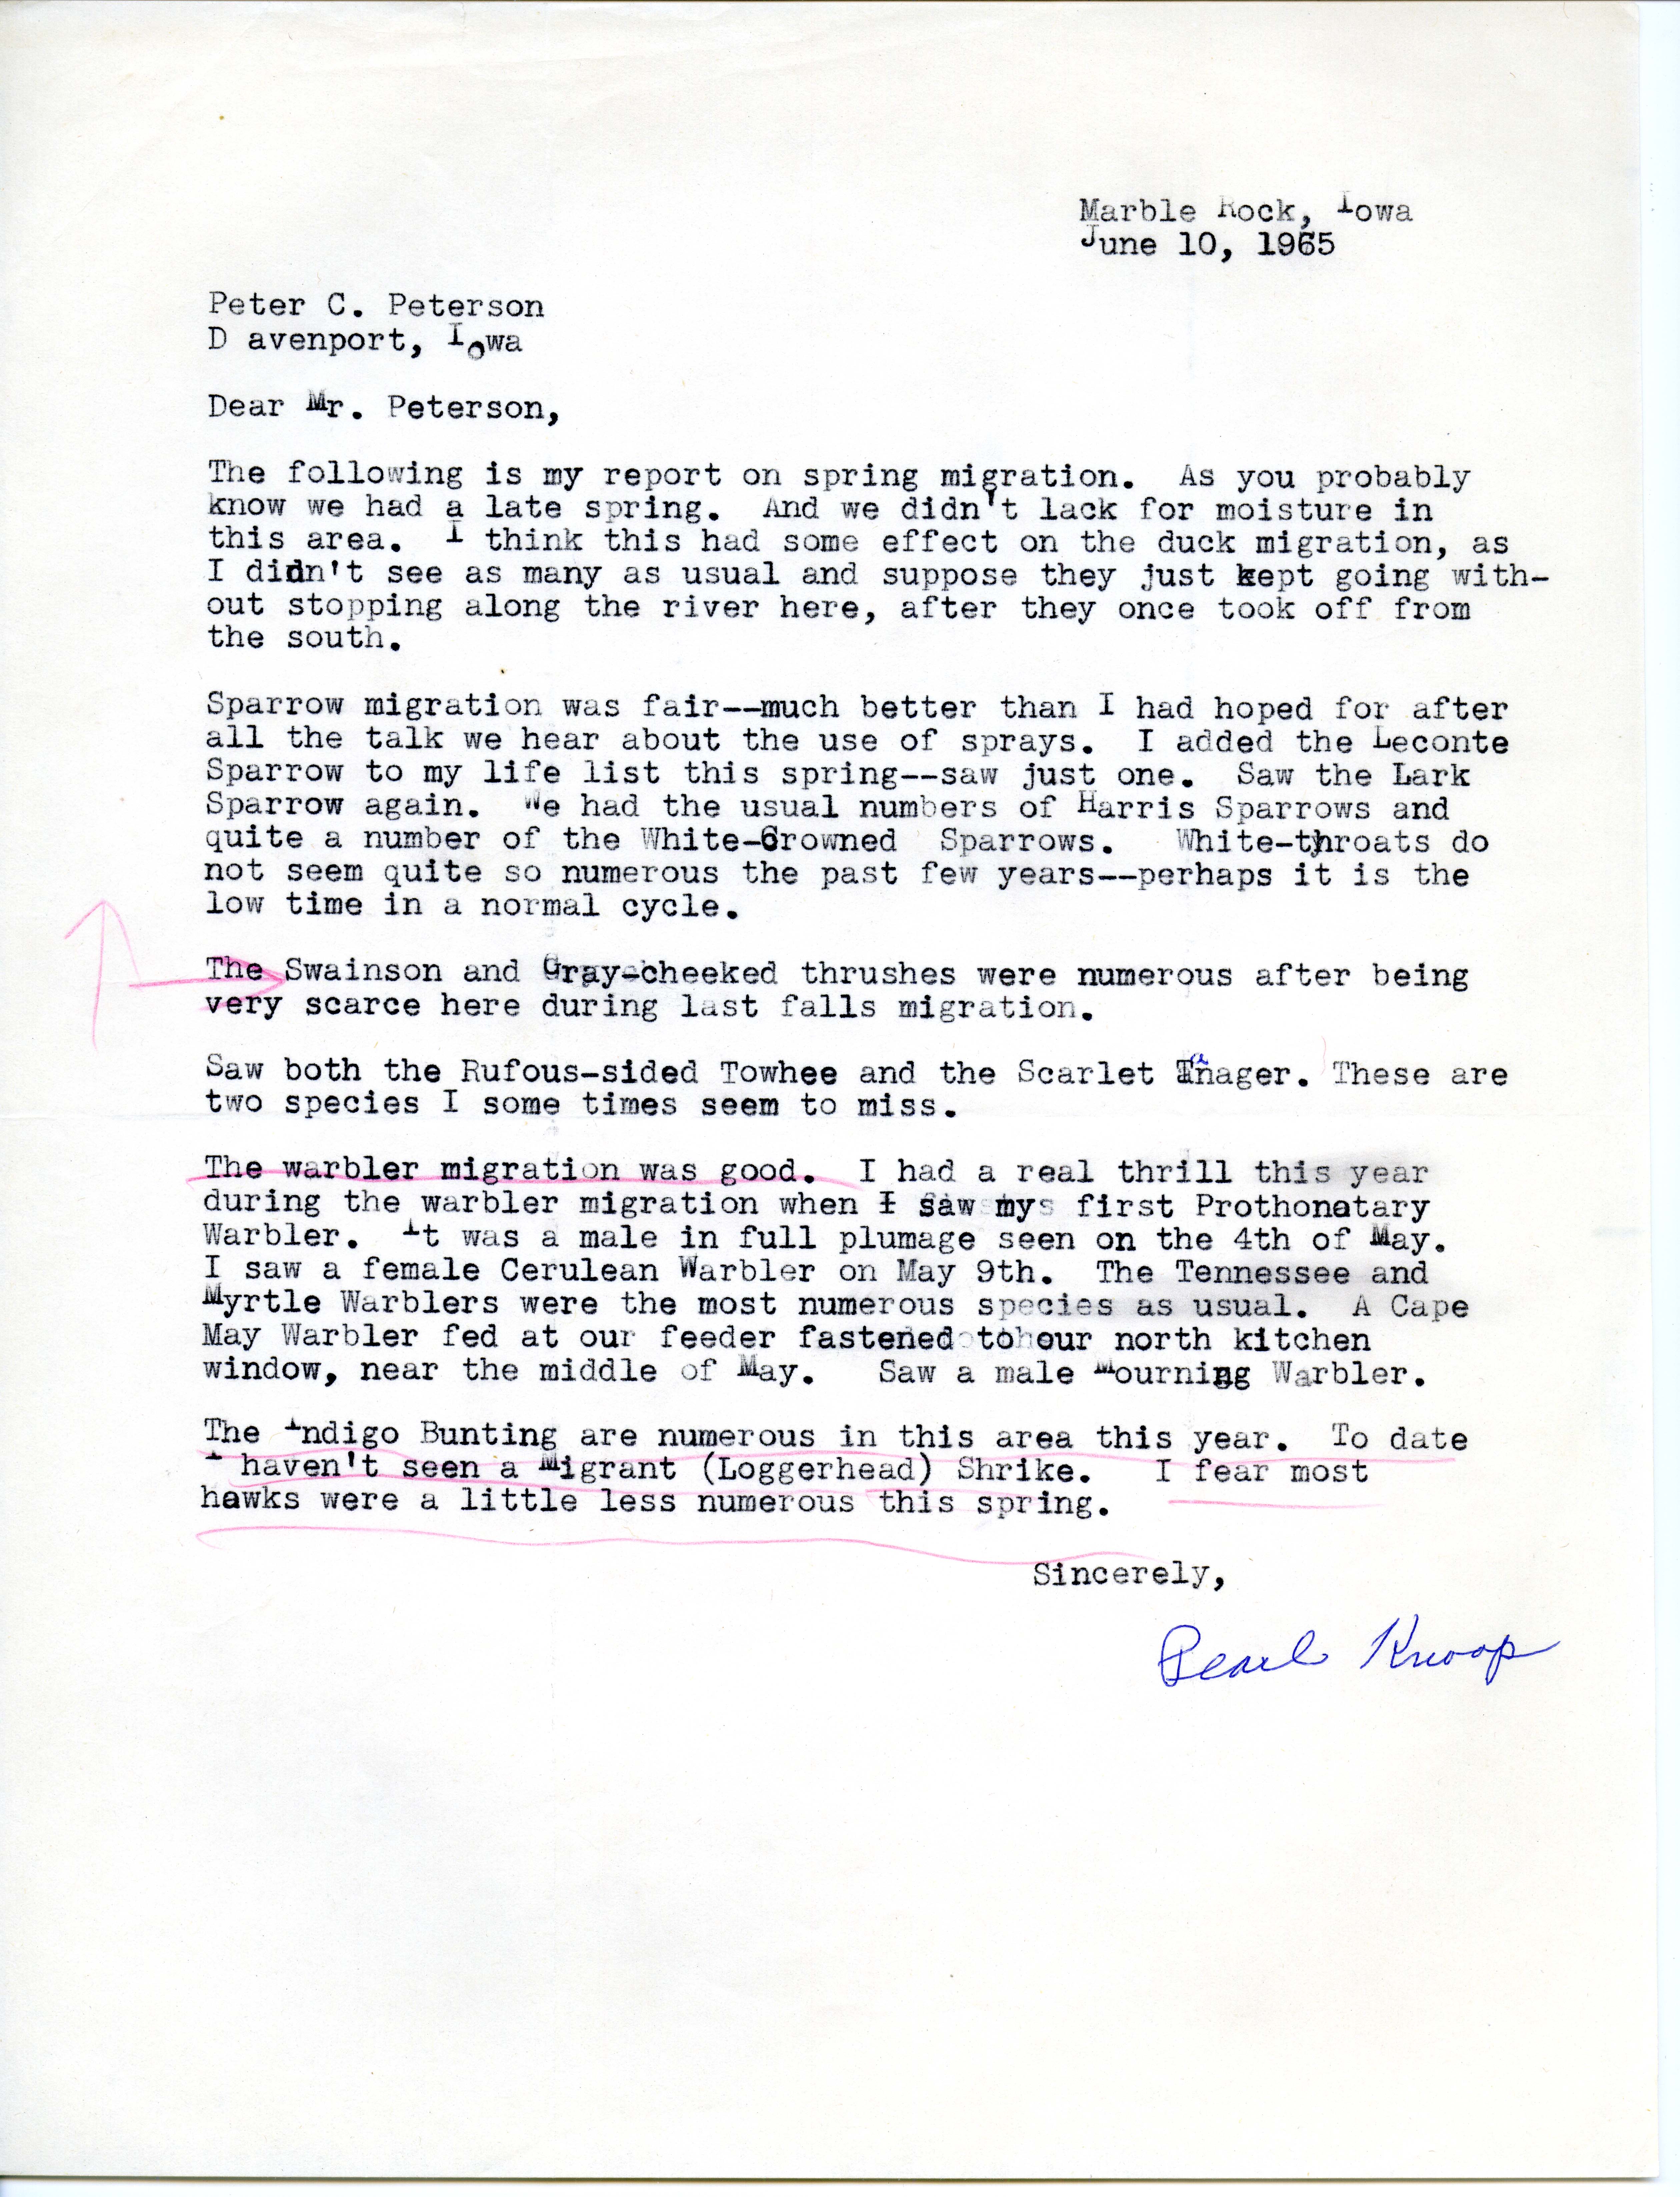 Pearl Knoop letter to Peter C. Petersen regarding Marble Rock, Iowa spring migration, June 10, 1965